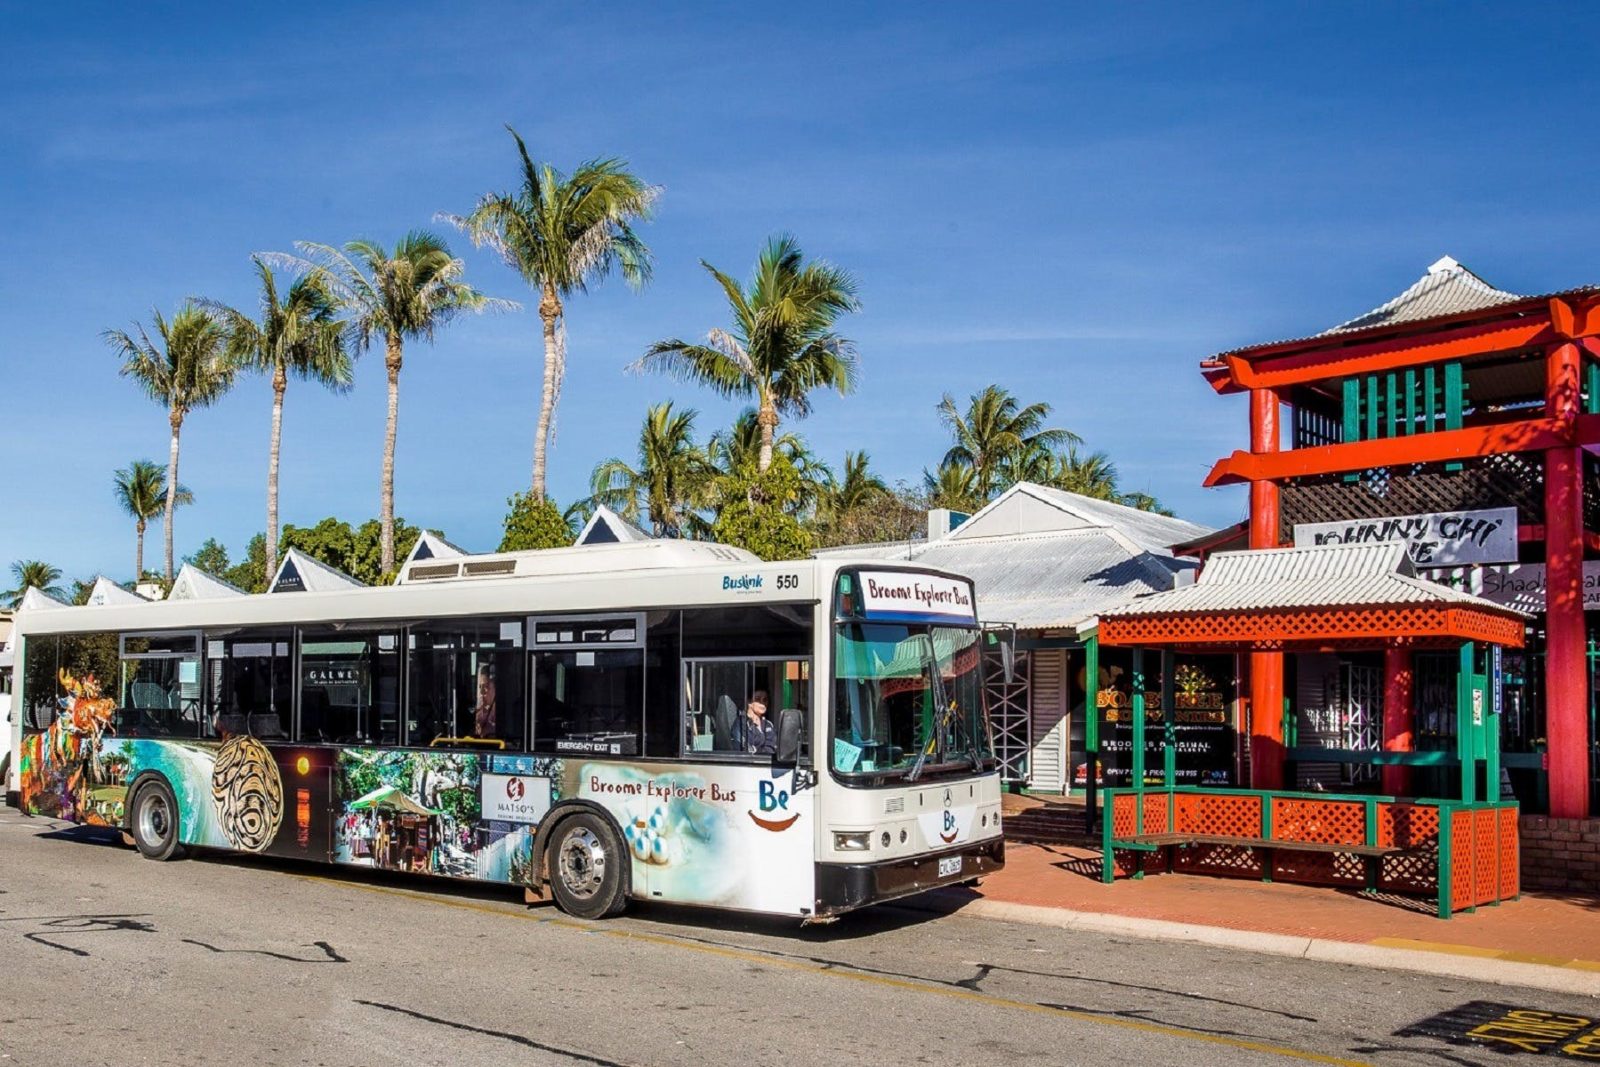 Broome Explorer Bus, Broome, Western Australia